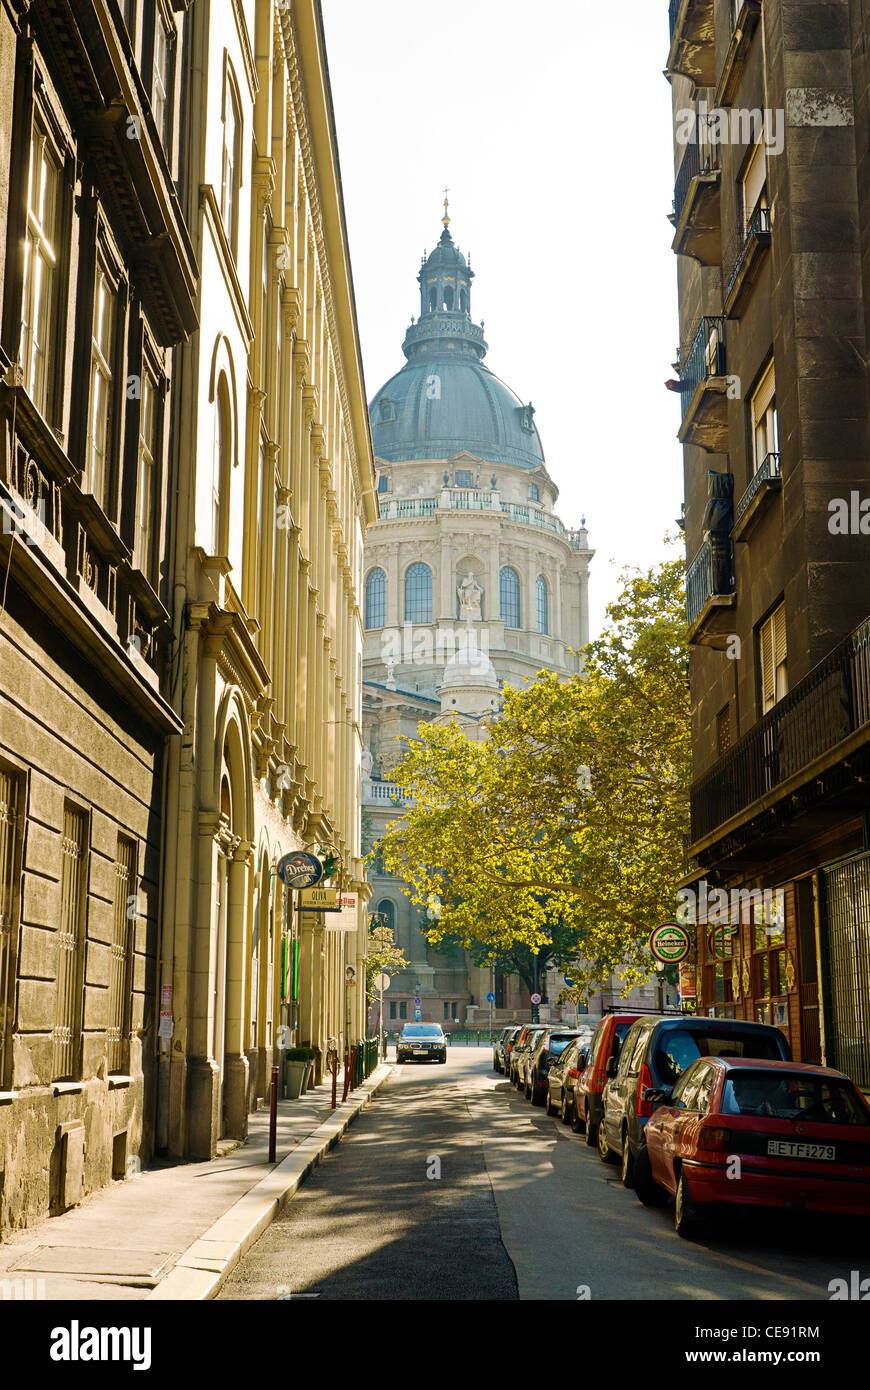 St. Stephen's Basilica seen from Lazar utca, Budapest, Hungary. Stock Photo